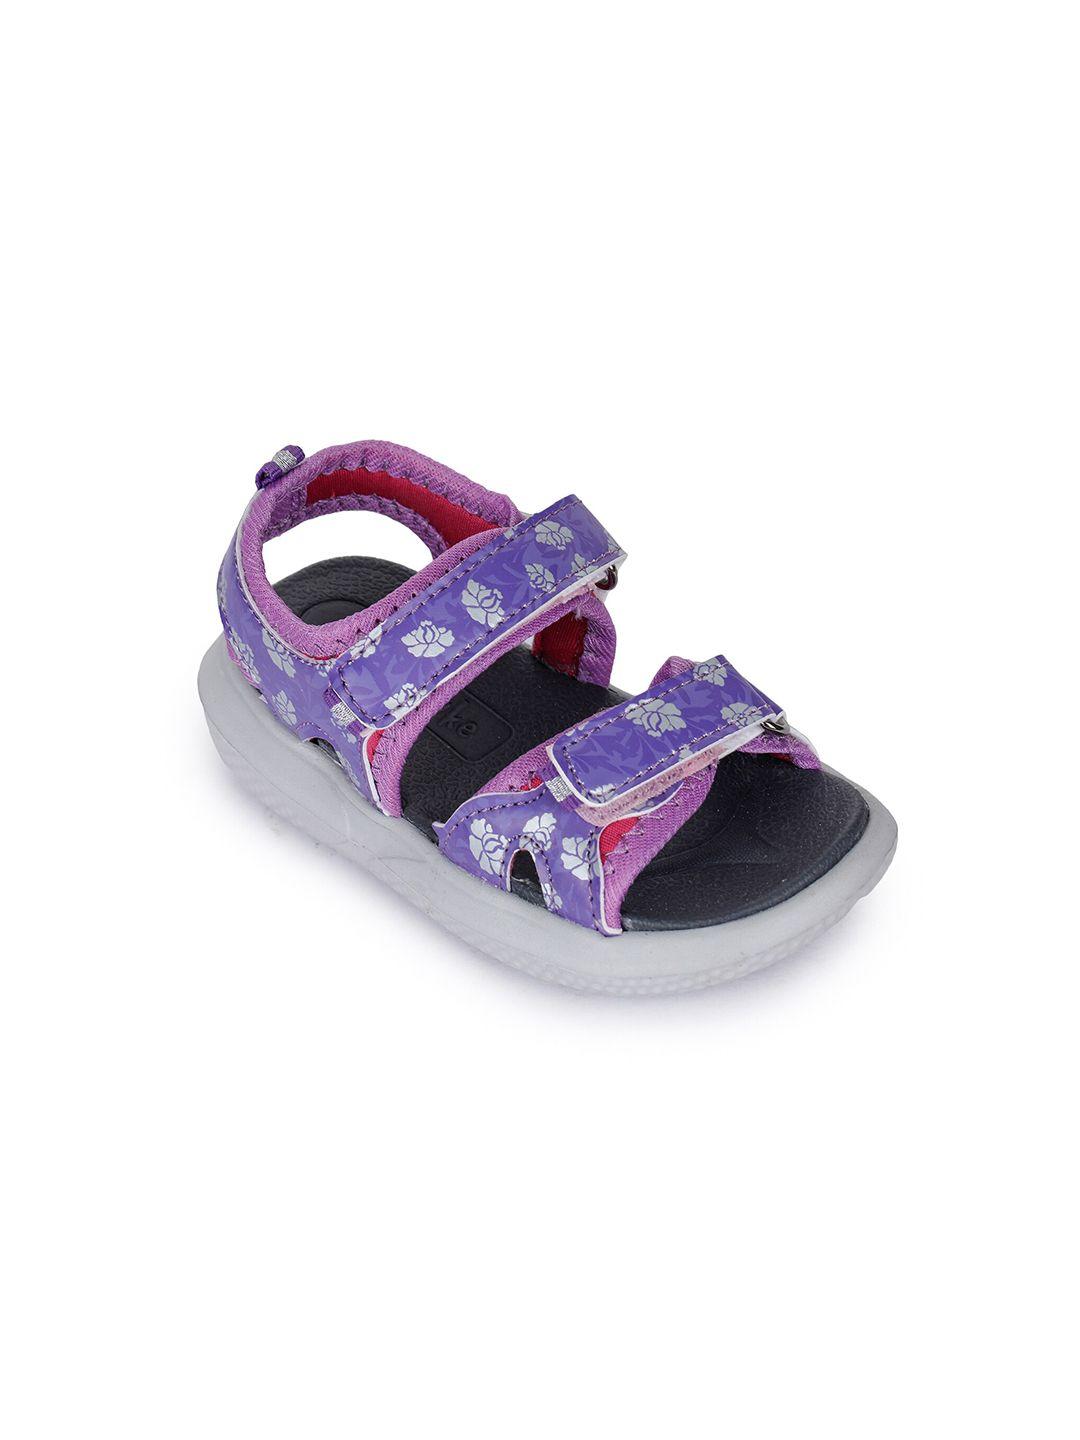 liberty unisex kids purple & black comfort sandals